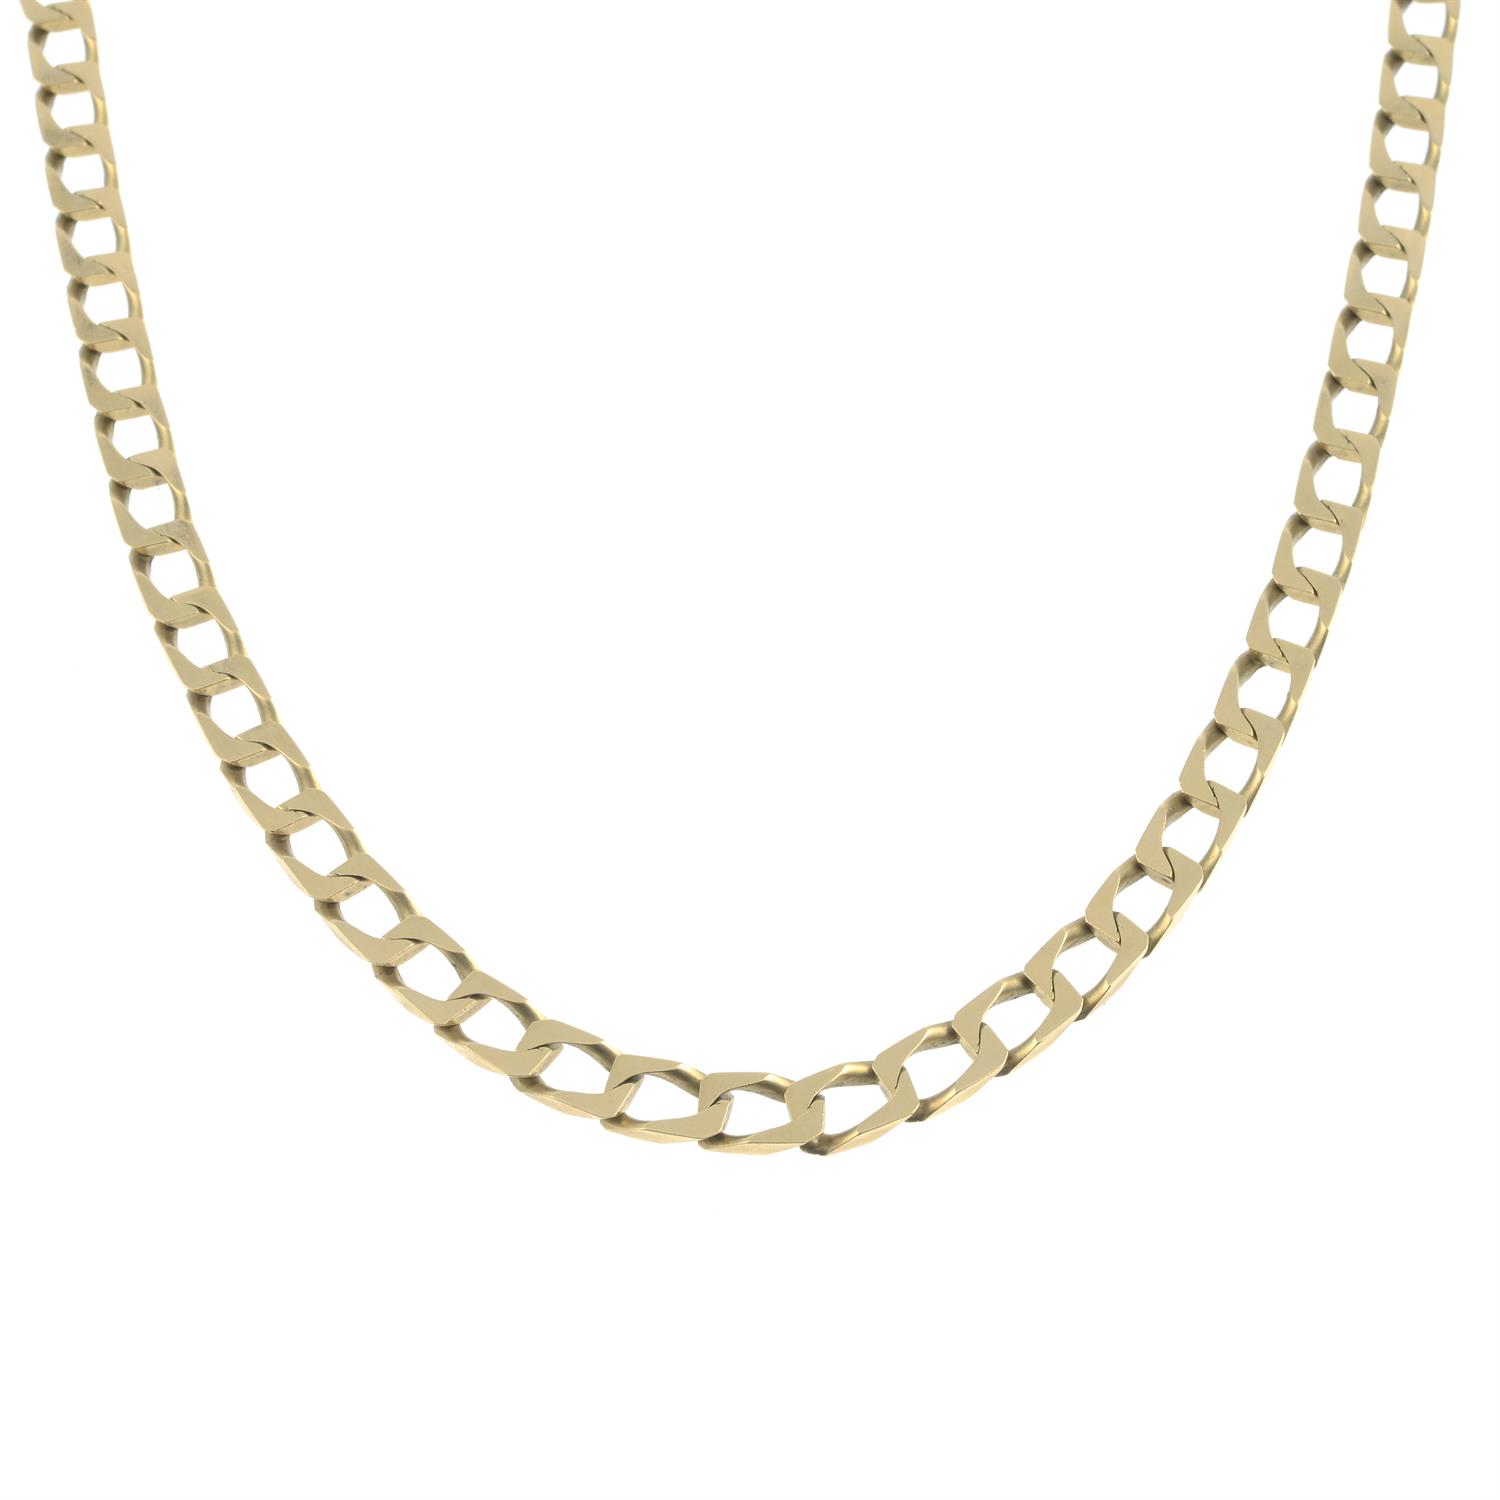 (57772) A 9ct gold square-shape link necklace.